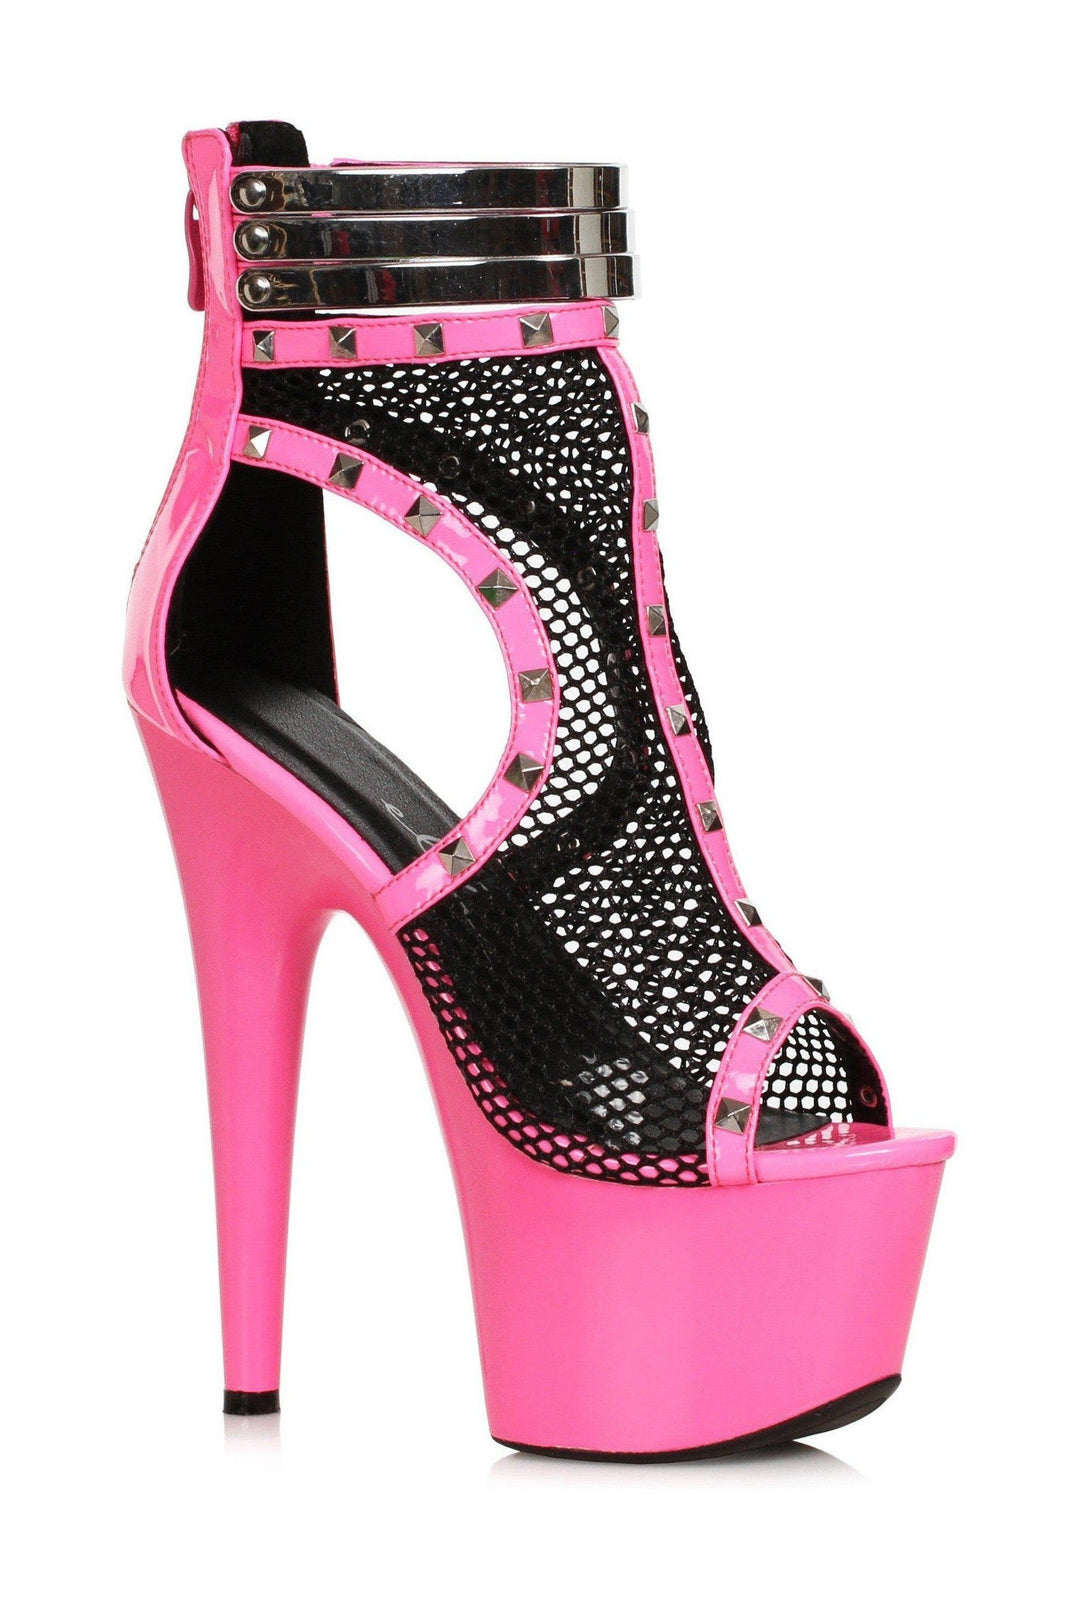 Ellie Shoes Fuchsia Sandals Platform Stripper Shoes | Buy at Sexyshoes.com